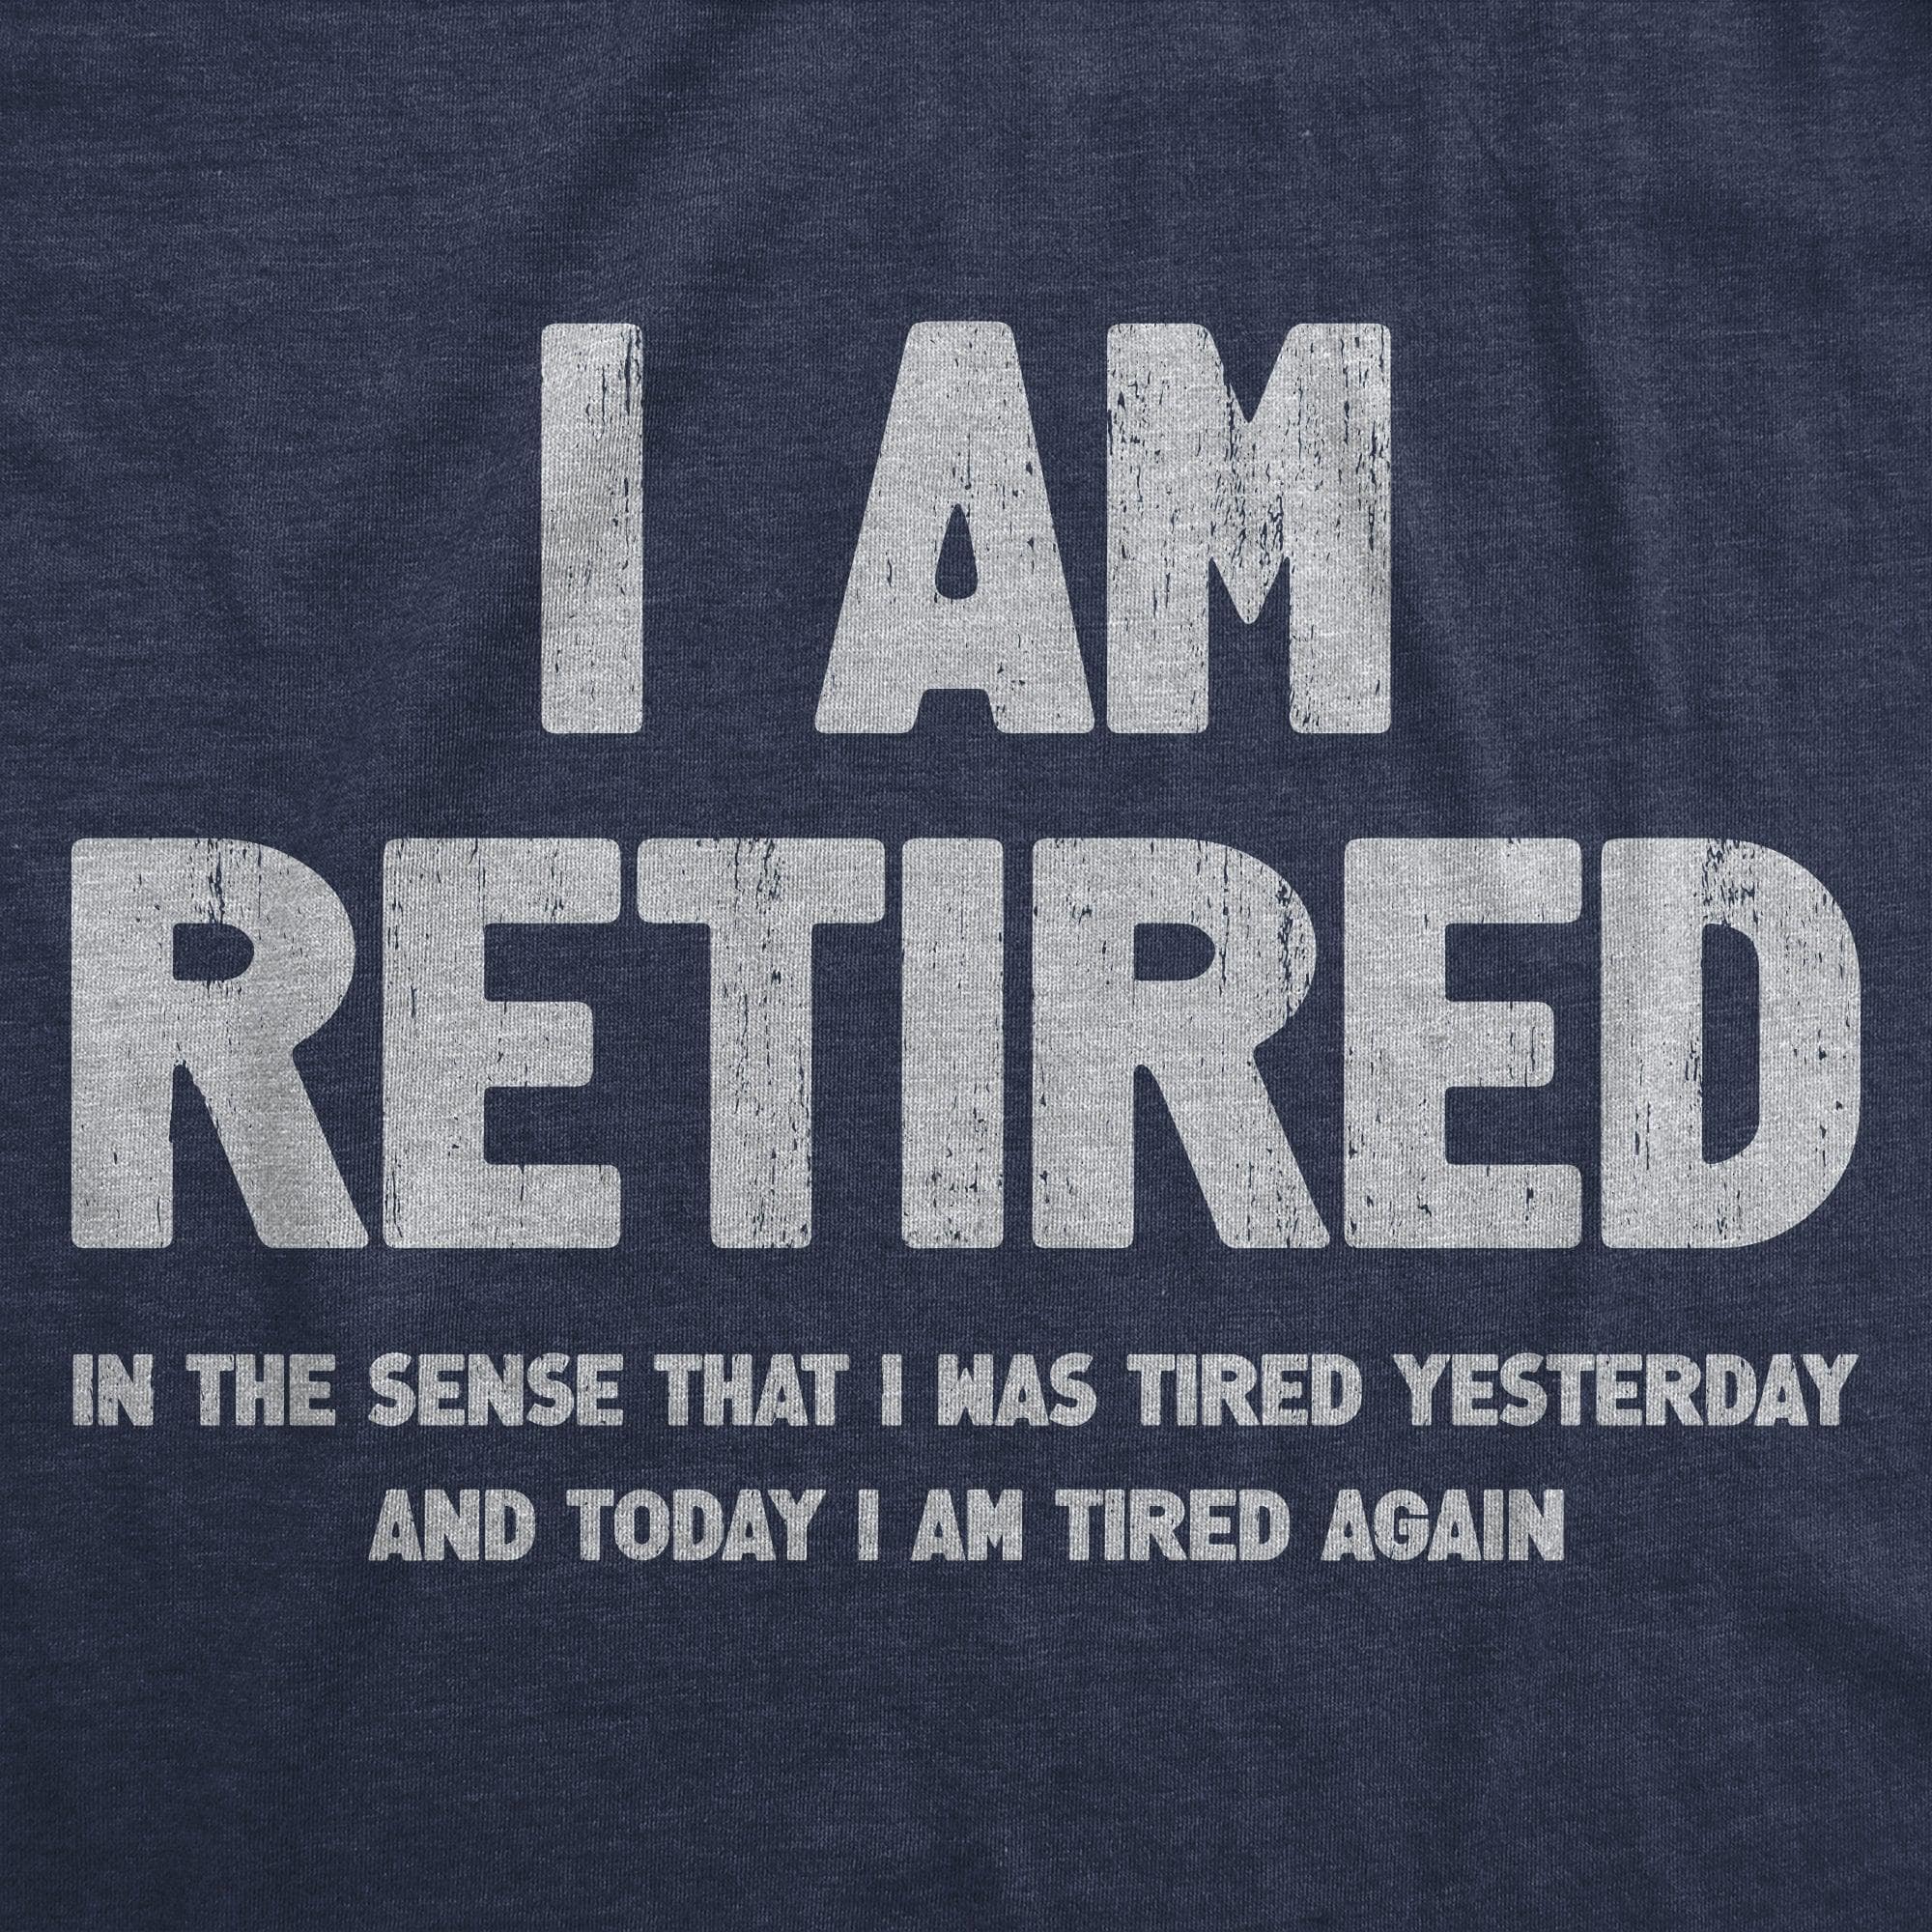 I Am Retired Men's Tshirt  -  Crazy Dog T-Shirts